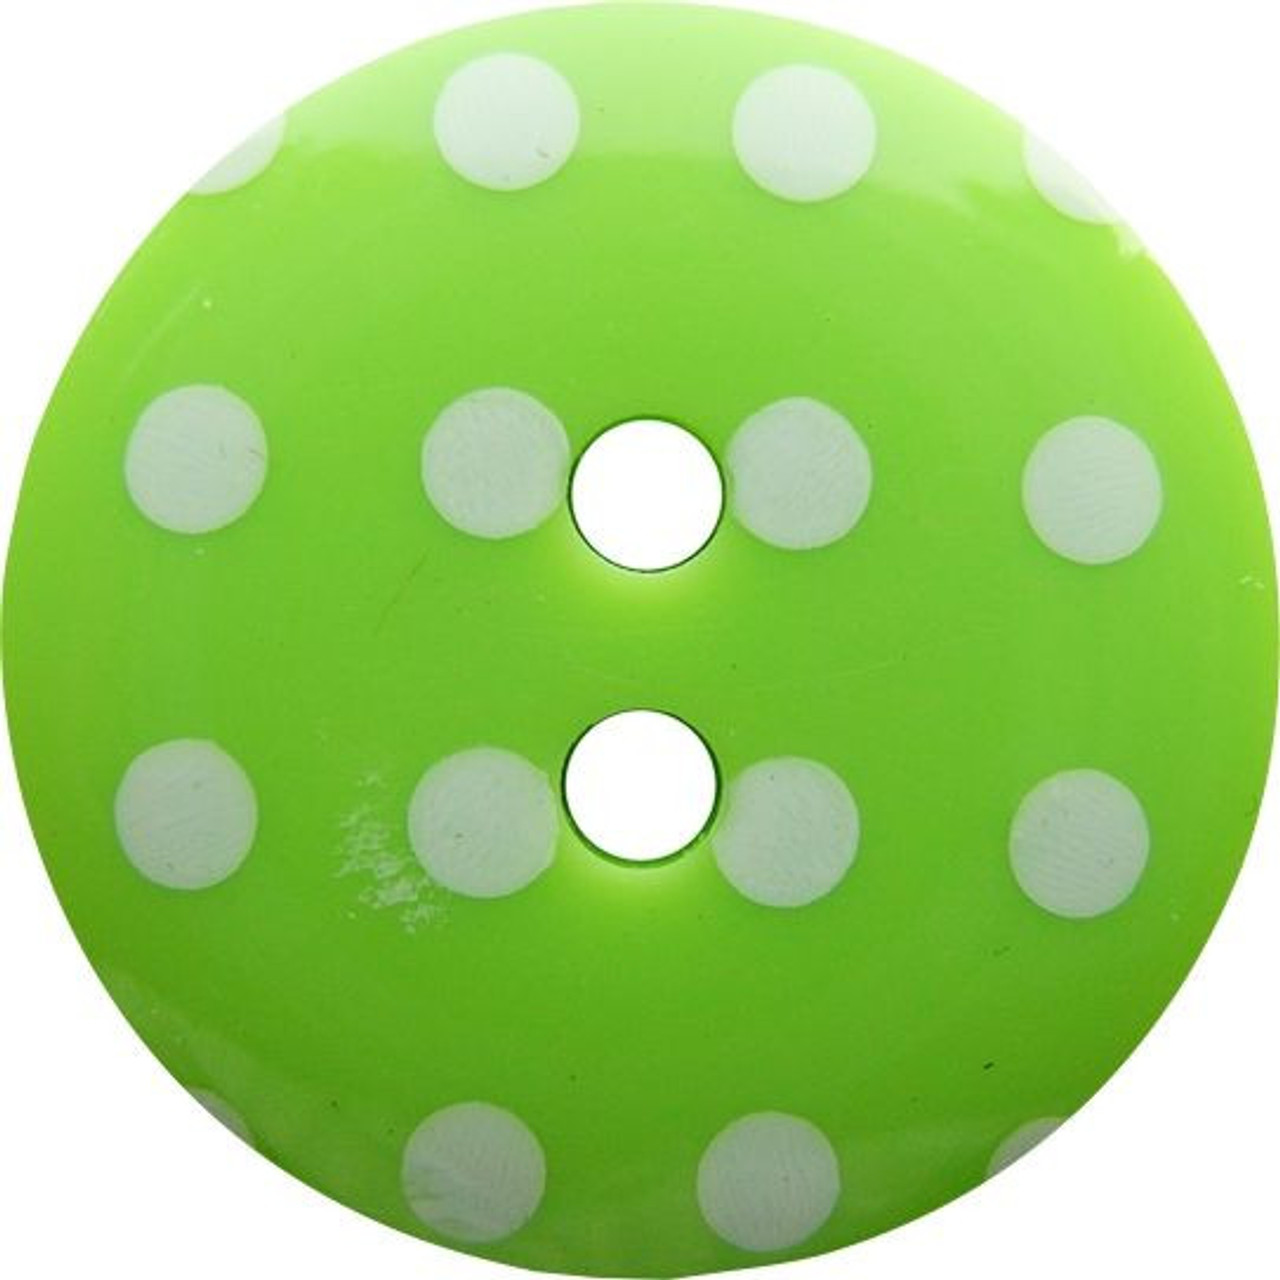 Lime Green & White Polka Dot Button -( Sold individually)